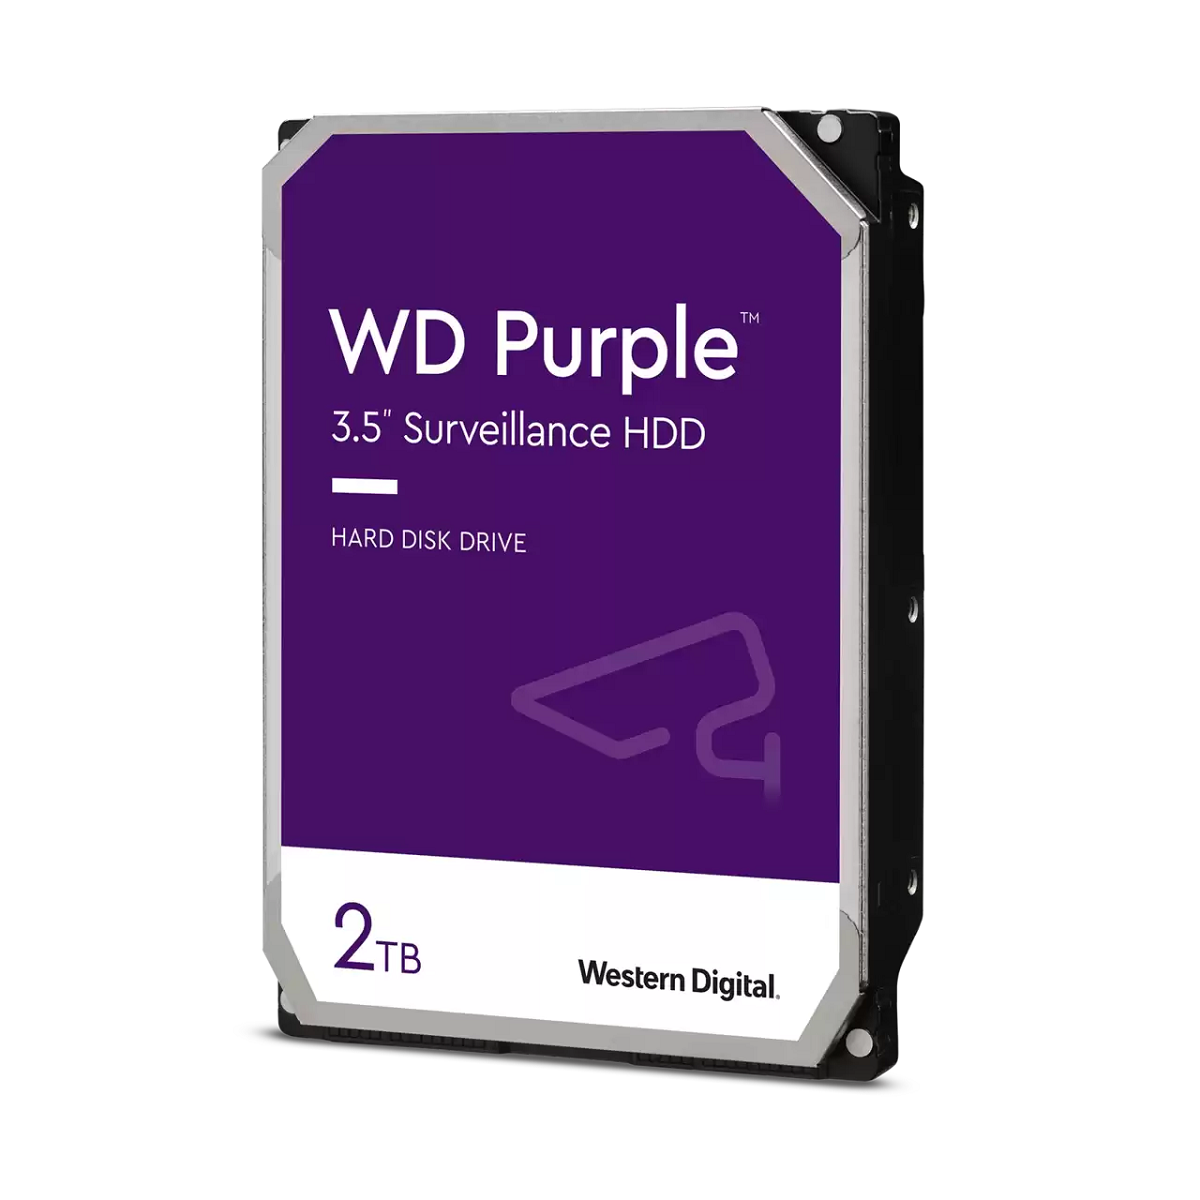 WD Purple 2TB Surveillance Hard Disk Drive - 5400 RPM Class SATA 6Gb/s 64MB Cache 3.5 Inch WD20PURX